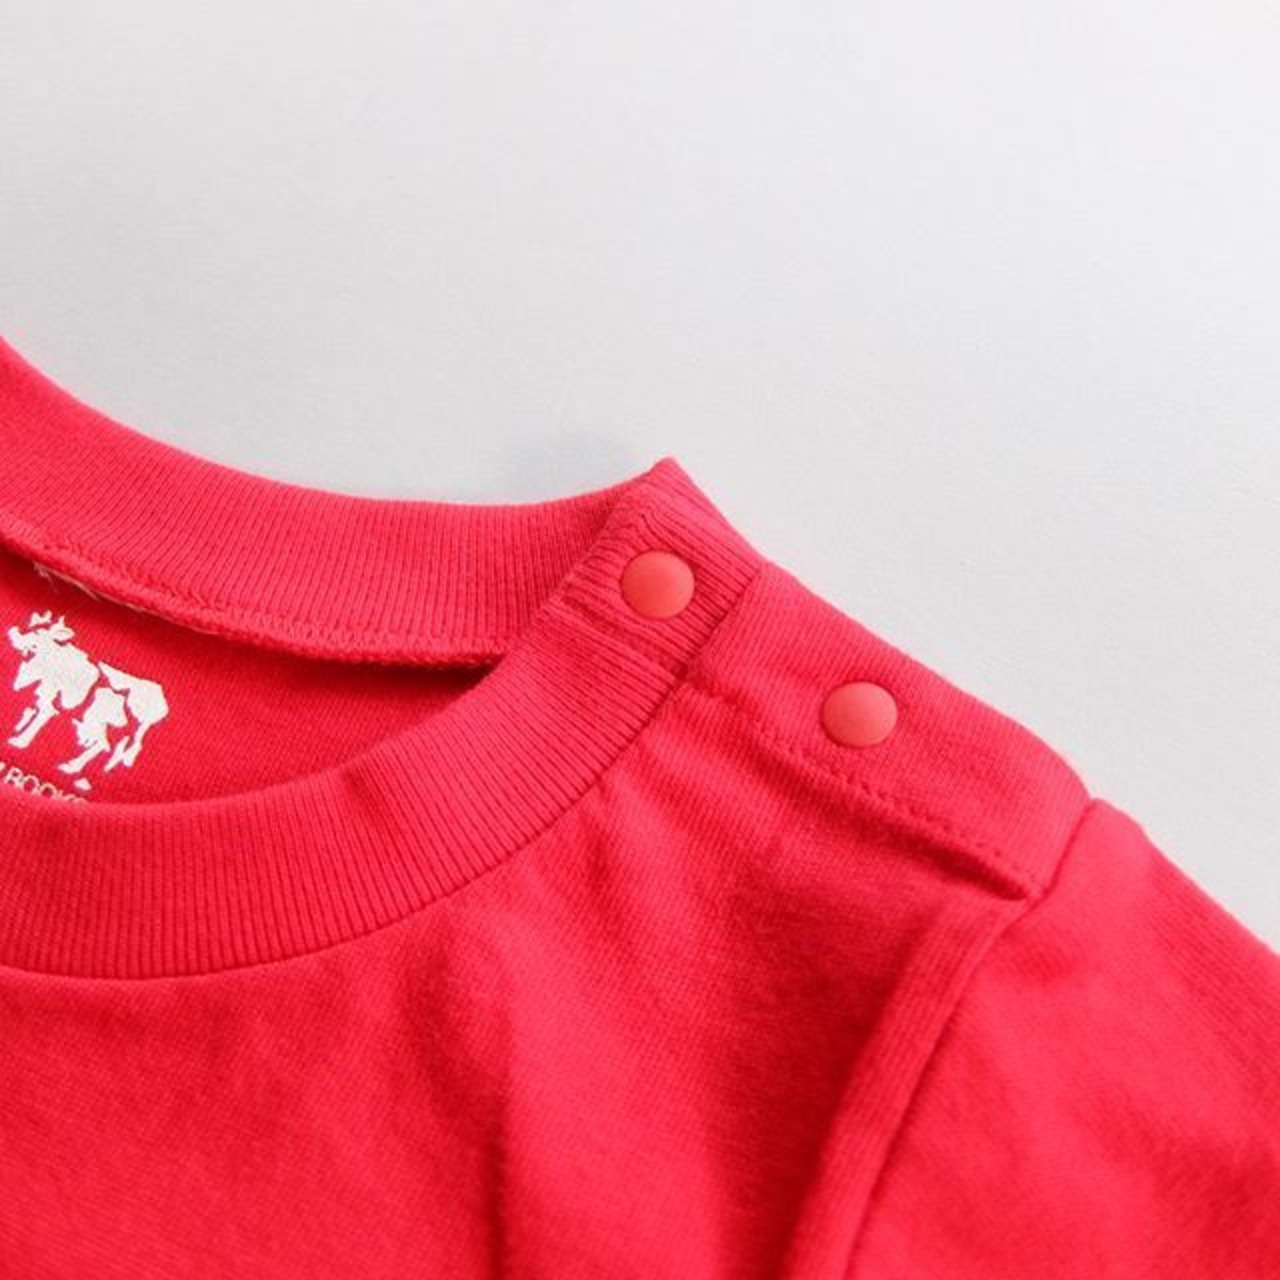 COWBOOKS / KID'S T-SHIRTS / RED / カウブックス / キッズTシャツ / レッド